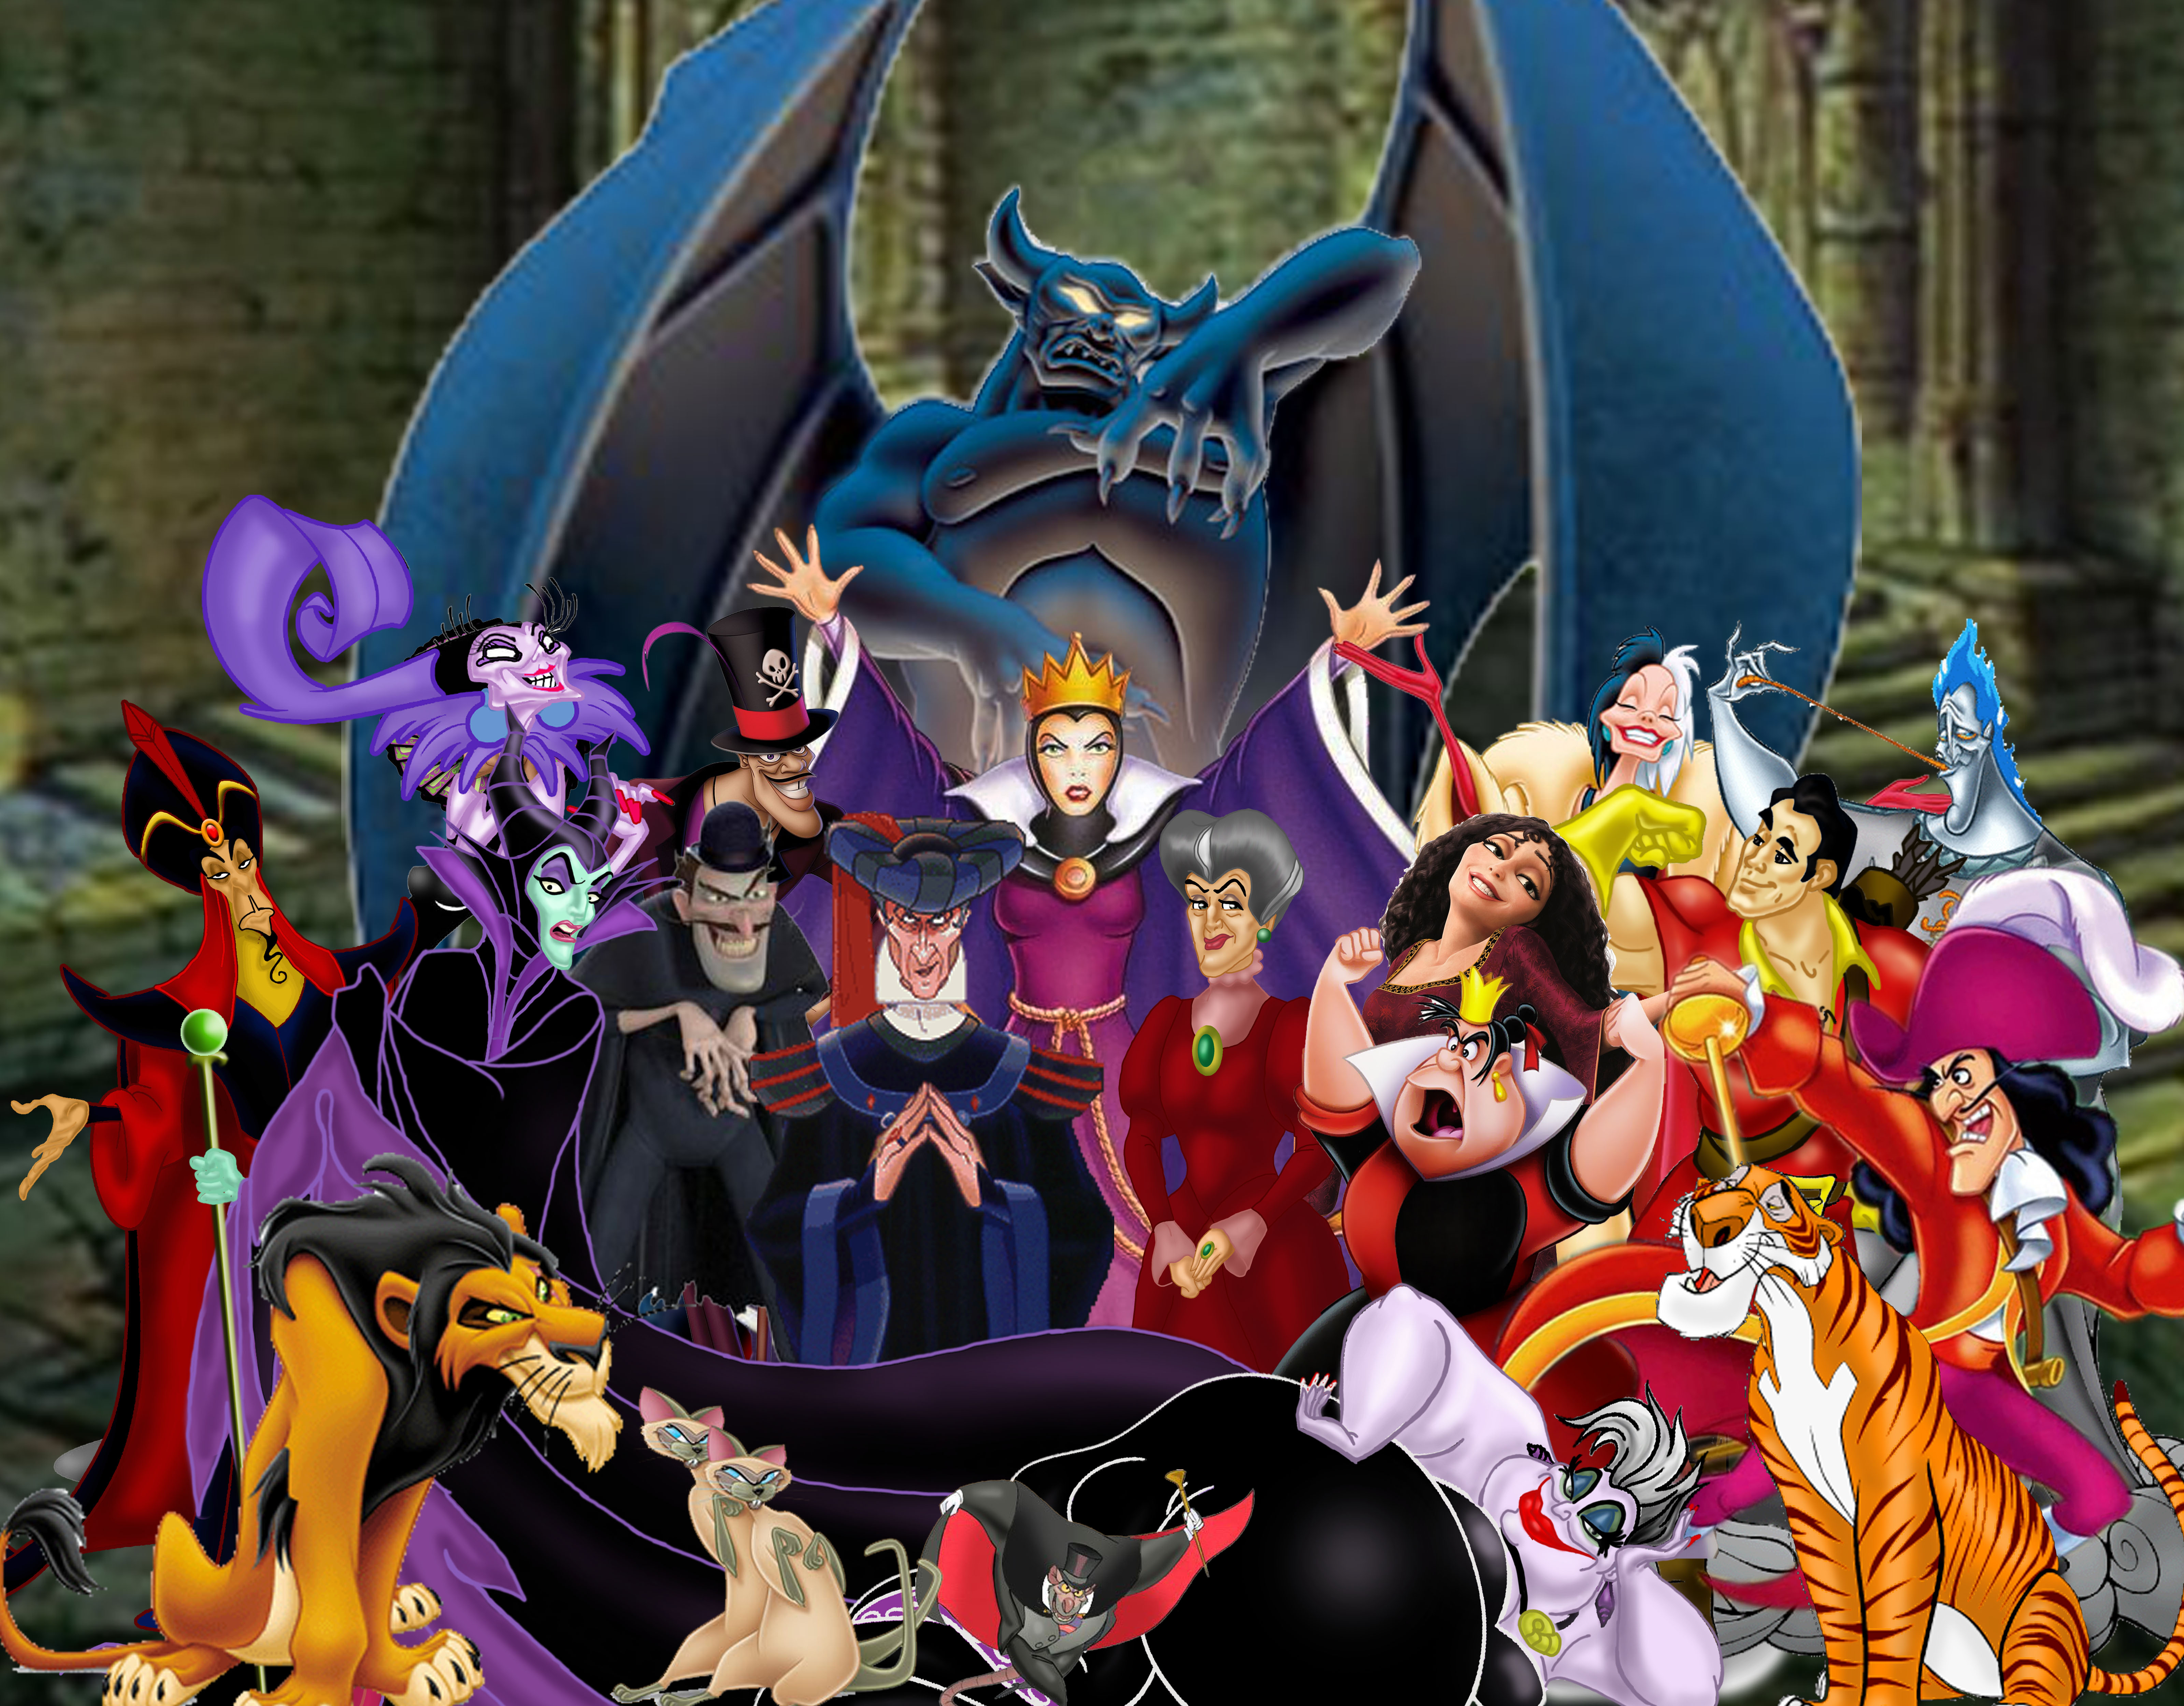 Disney Villains Wallpaper Live Action by Thekingblader995 on DeviantArt